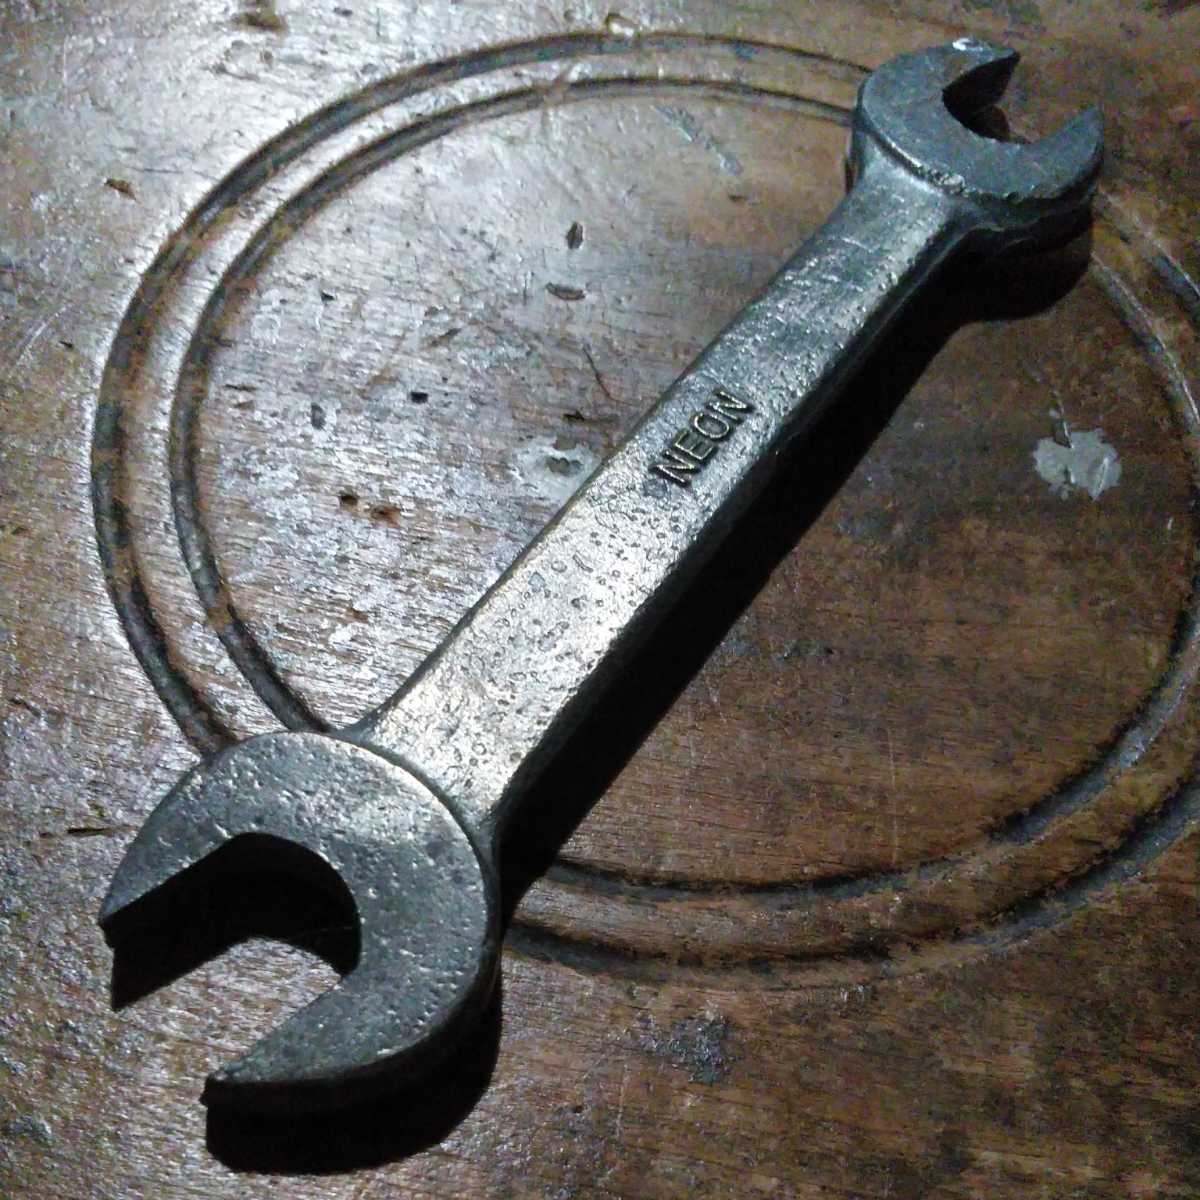  Daihatsu industry loaded tool combination wrench size inscription 12-14mm. total length 138.9mm. Daihatsu back surface - NEON tough to Rocky Chantez 